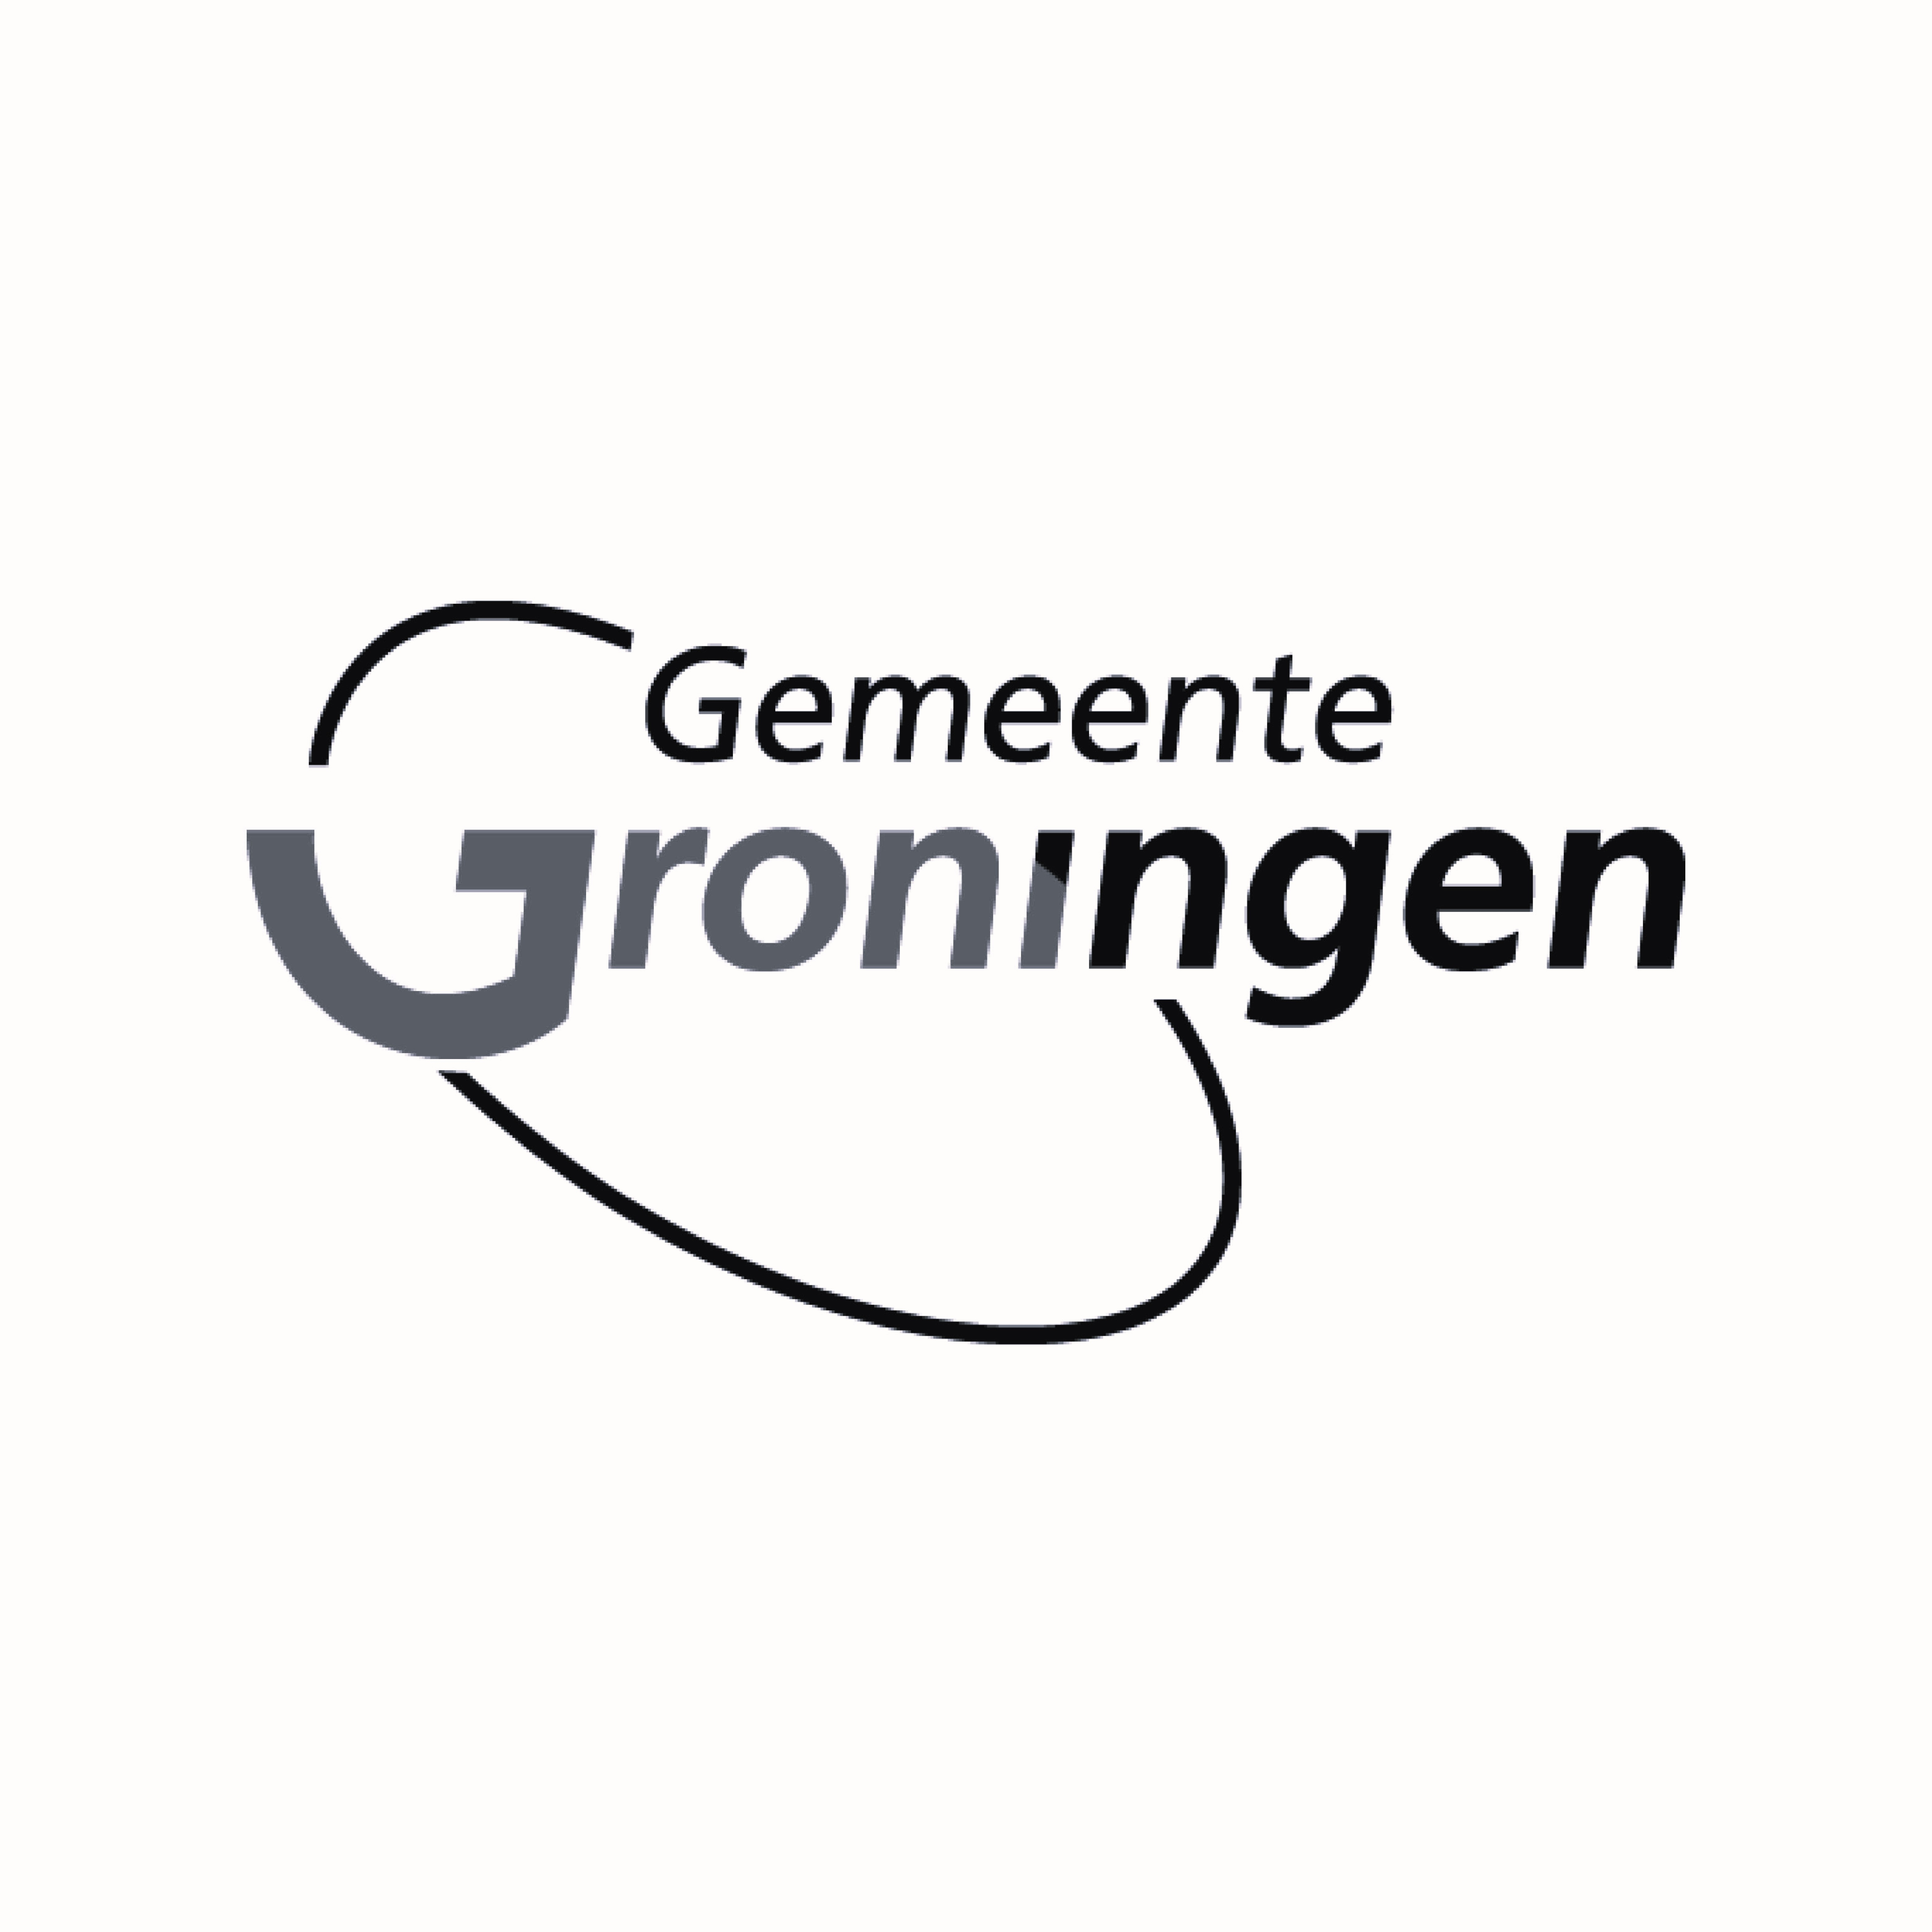 Gemeente Groningen zwart-wit